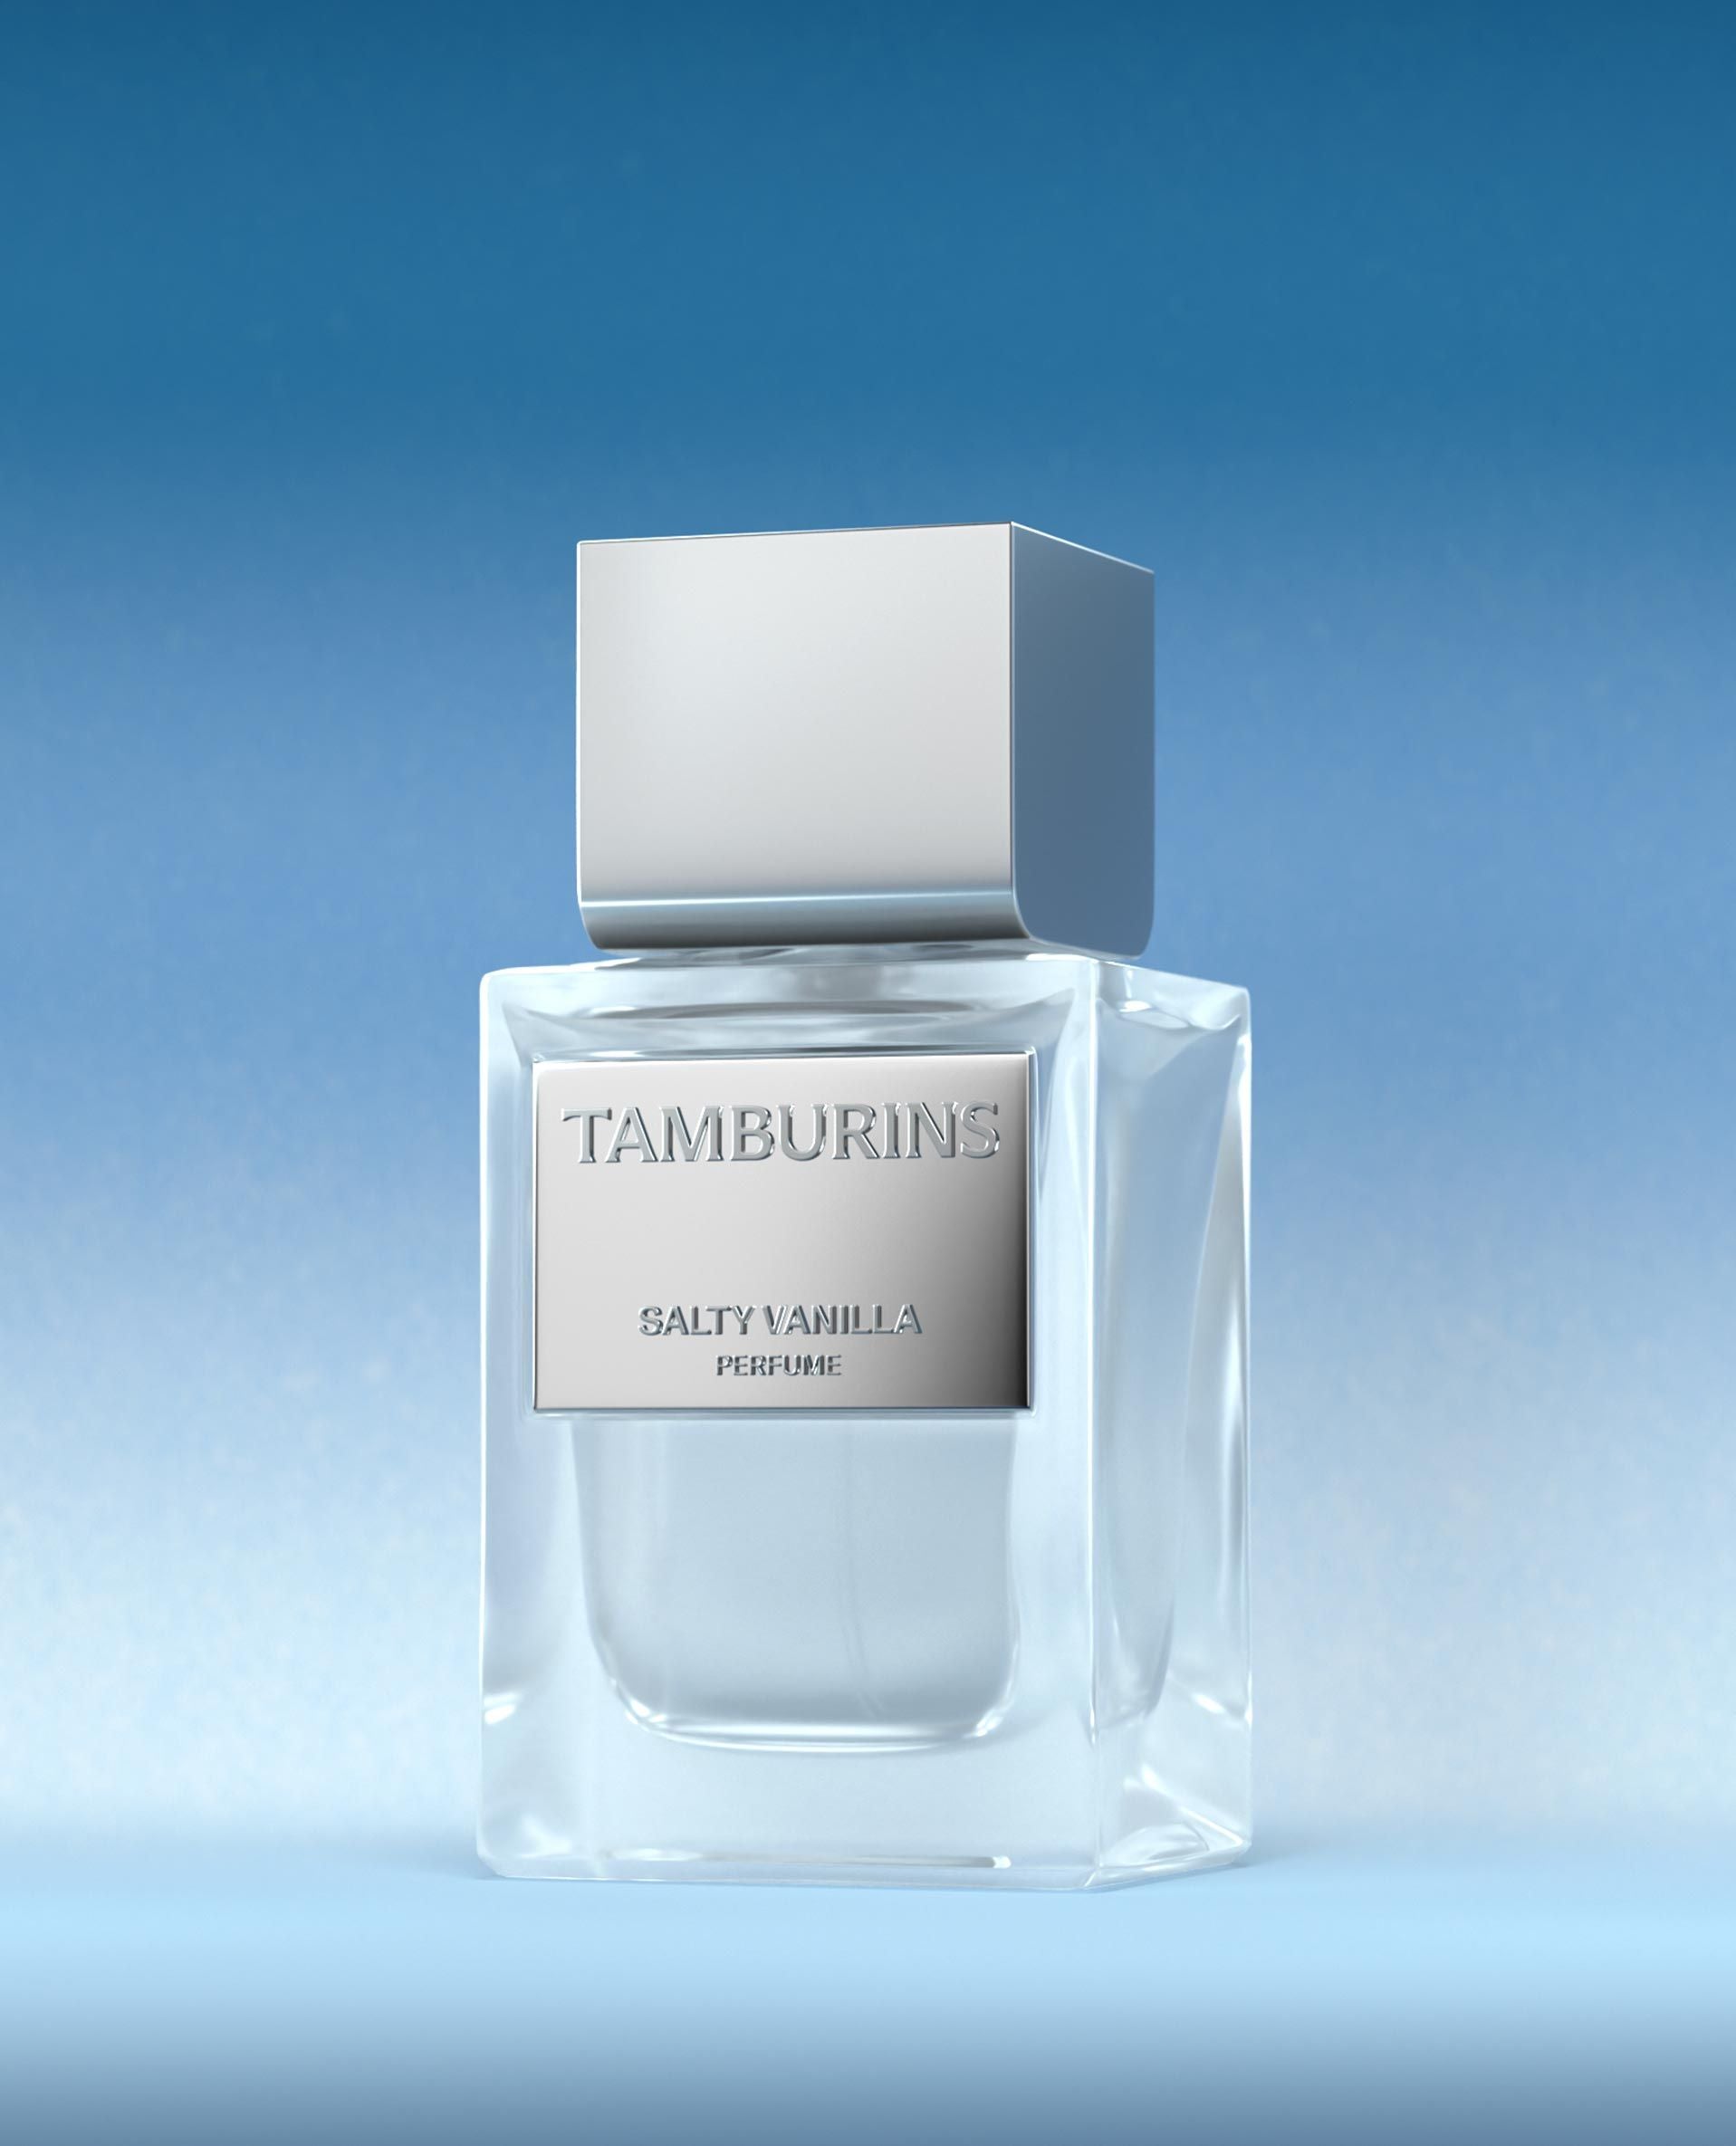 TAMBURINS 香水塩味バニラ11ml / 50ml